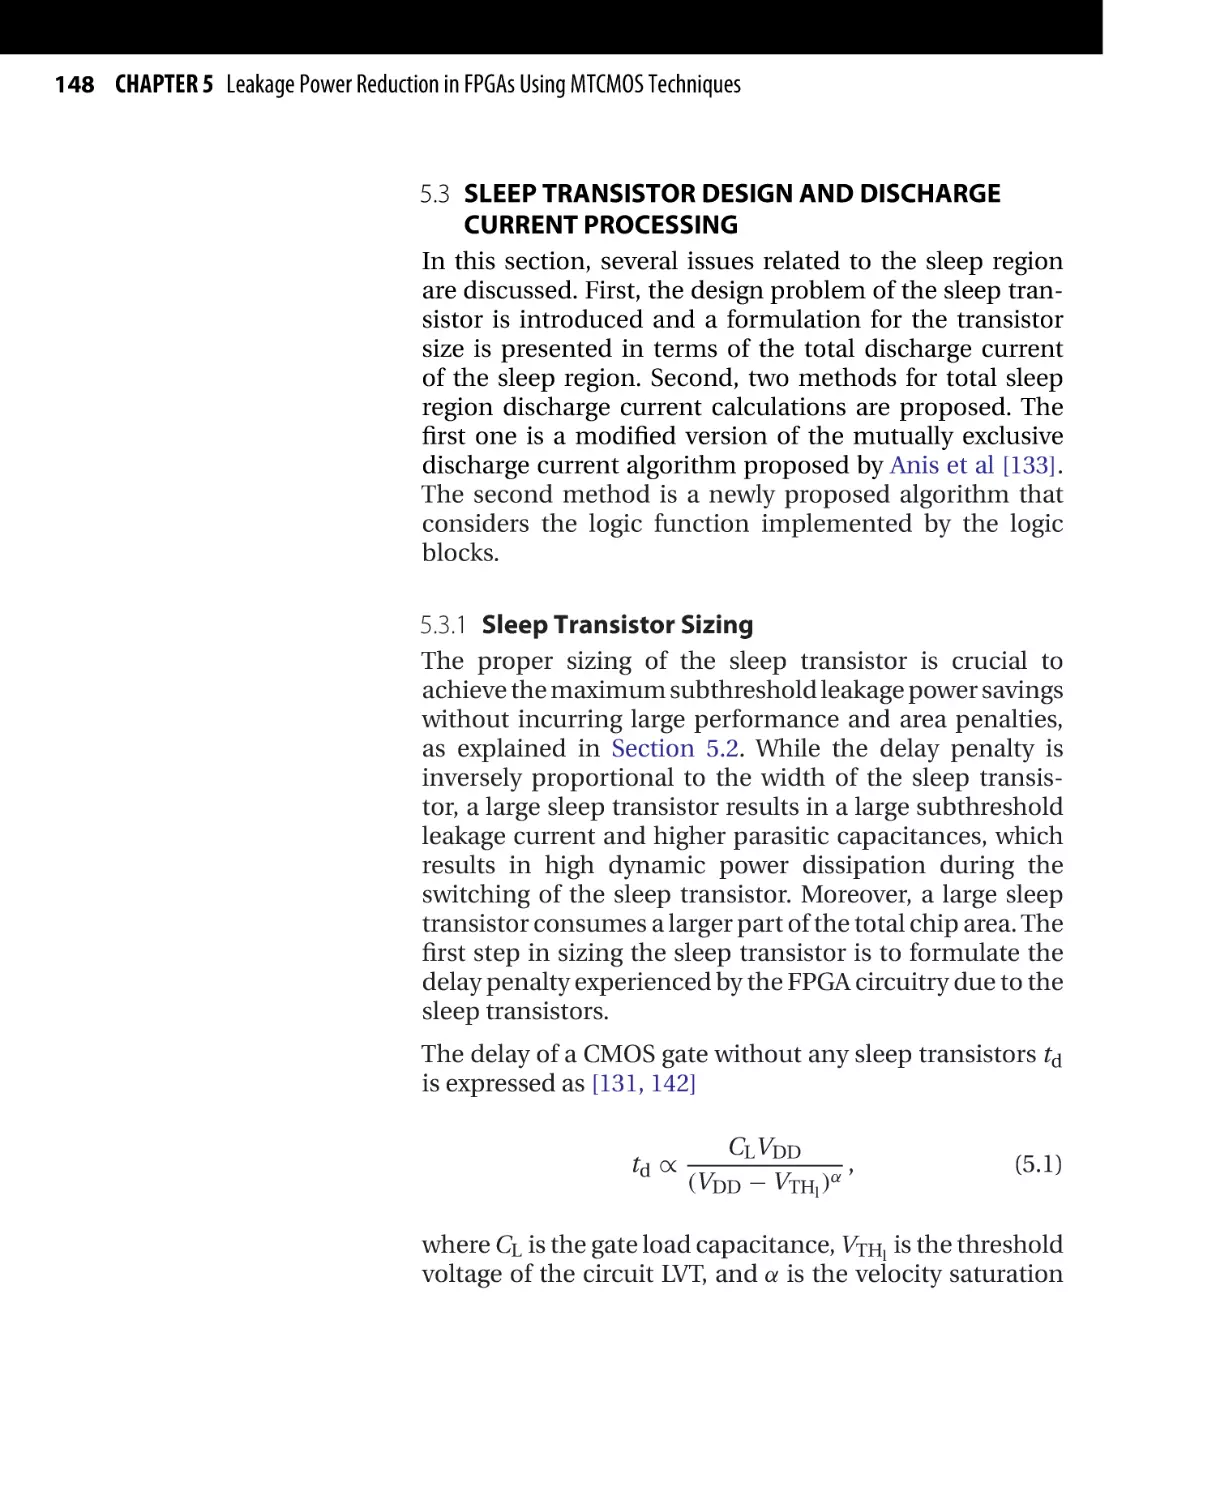 Sleep Transistor Design and Discharge Current Processing
Sleep Transistor Sizing